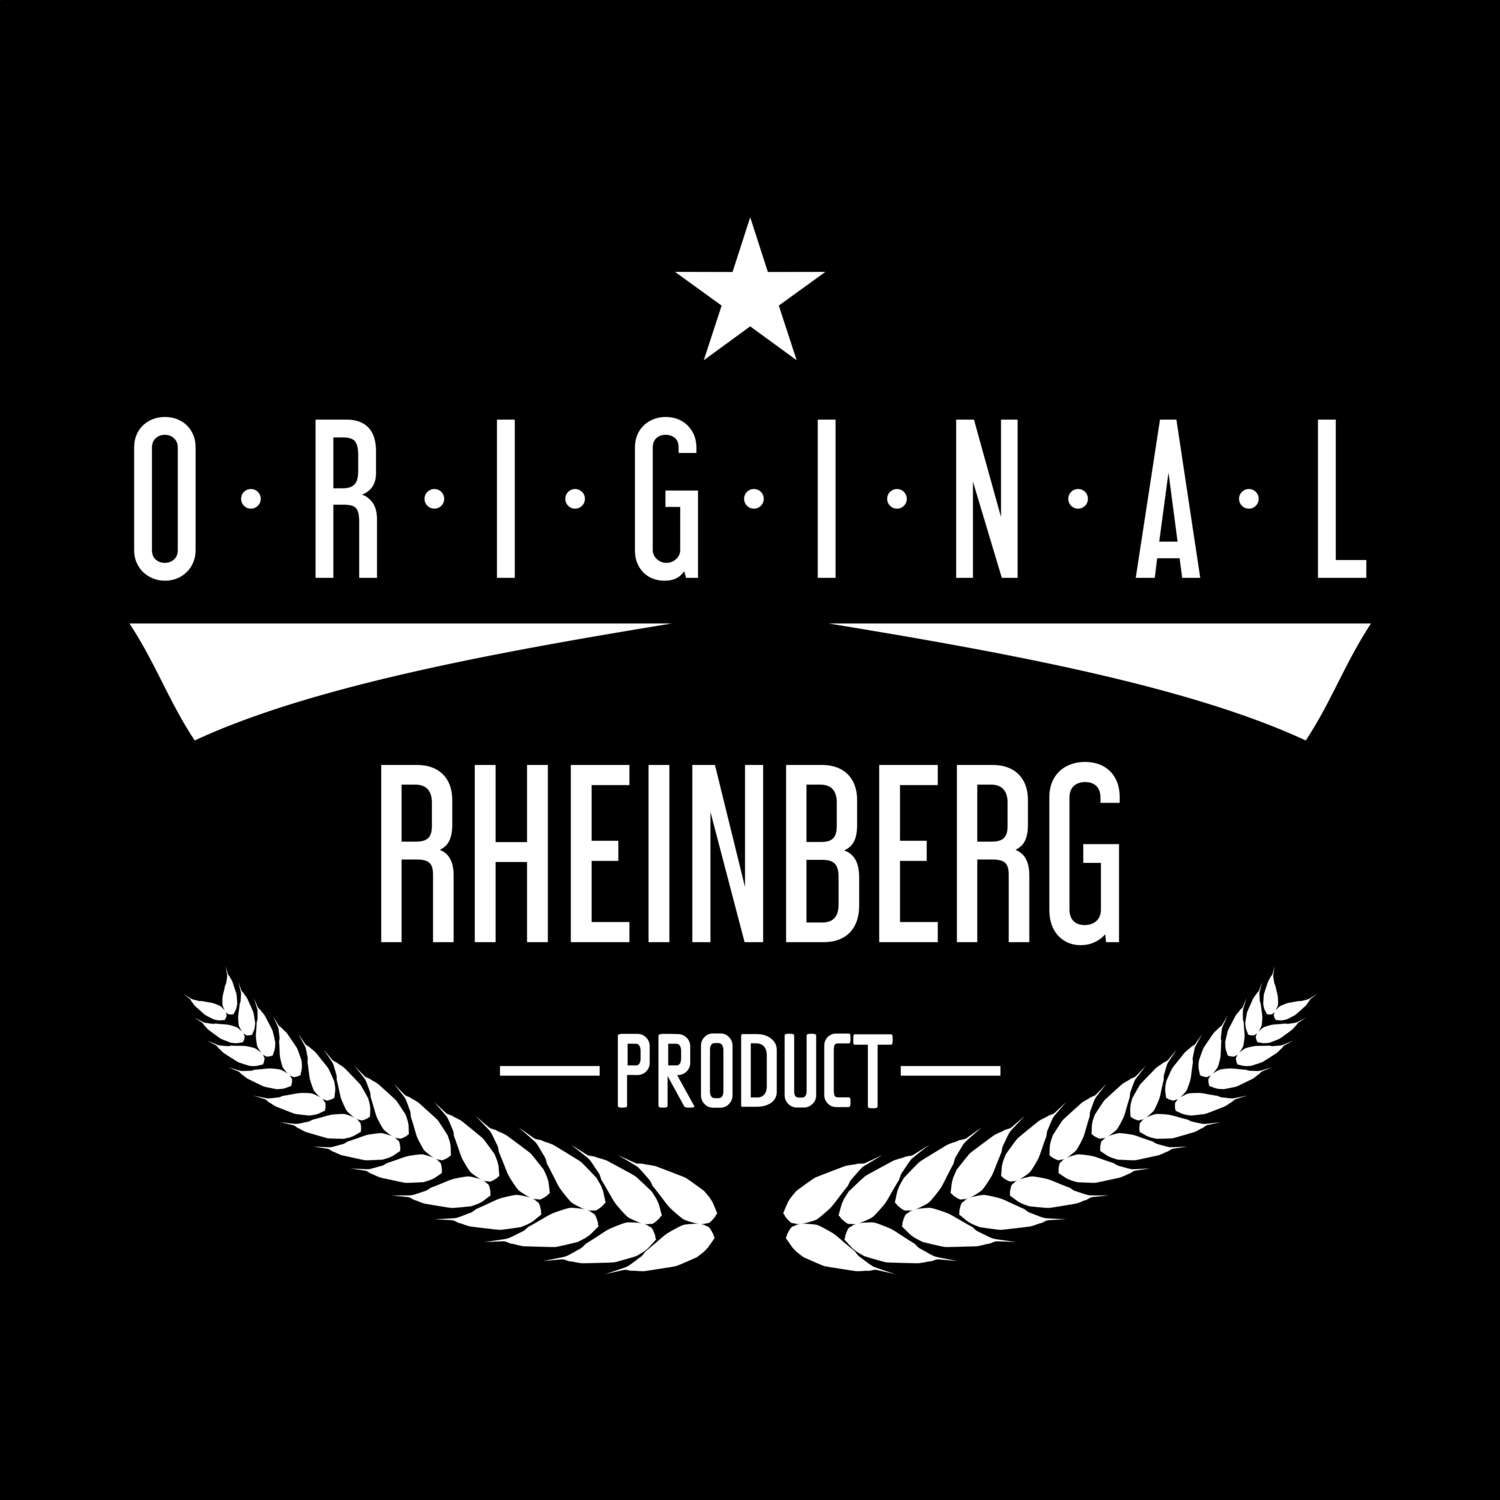 Rheinberg T-Shirt »Original Product«